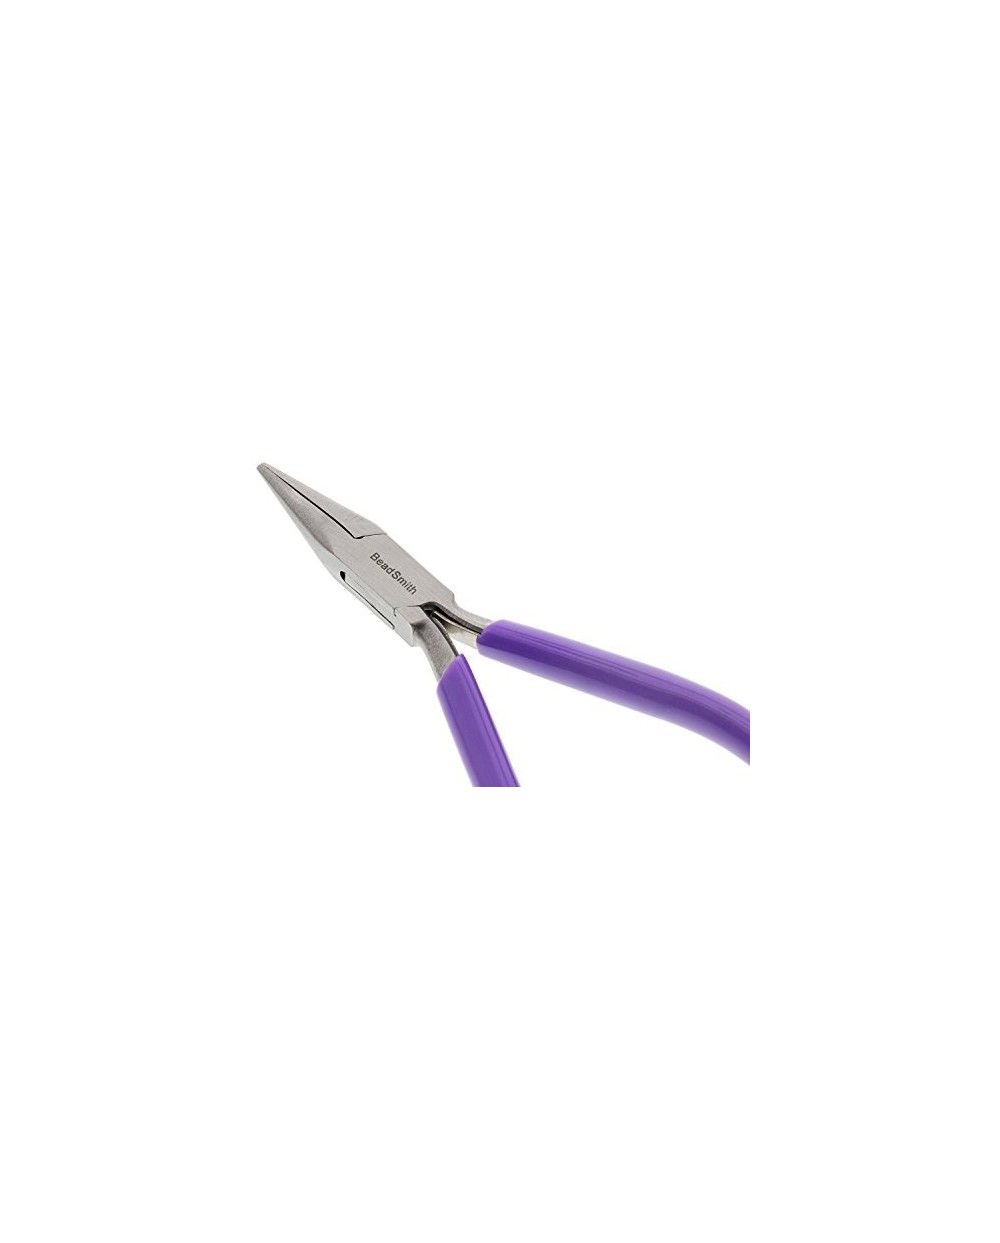 Replės plokščios smailia nosimi su violetine rankenėle, 115cm, 1 vnt.